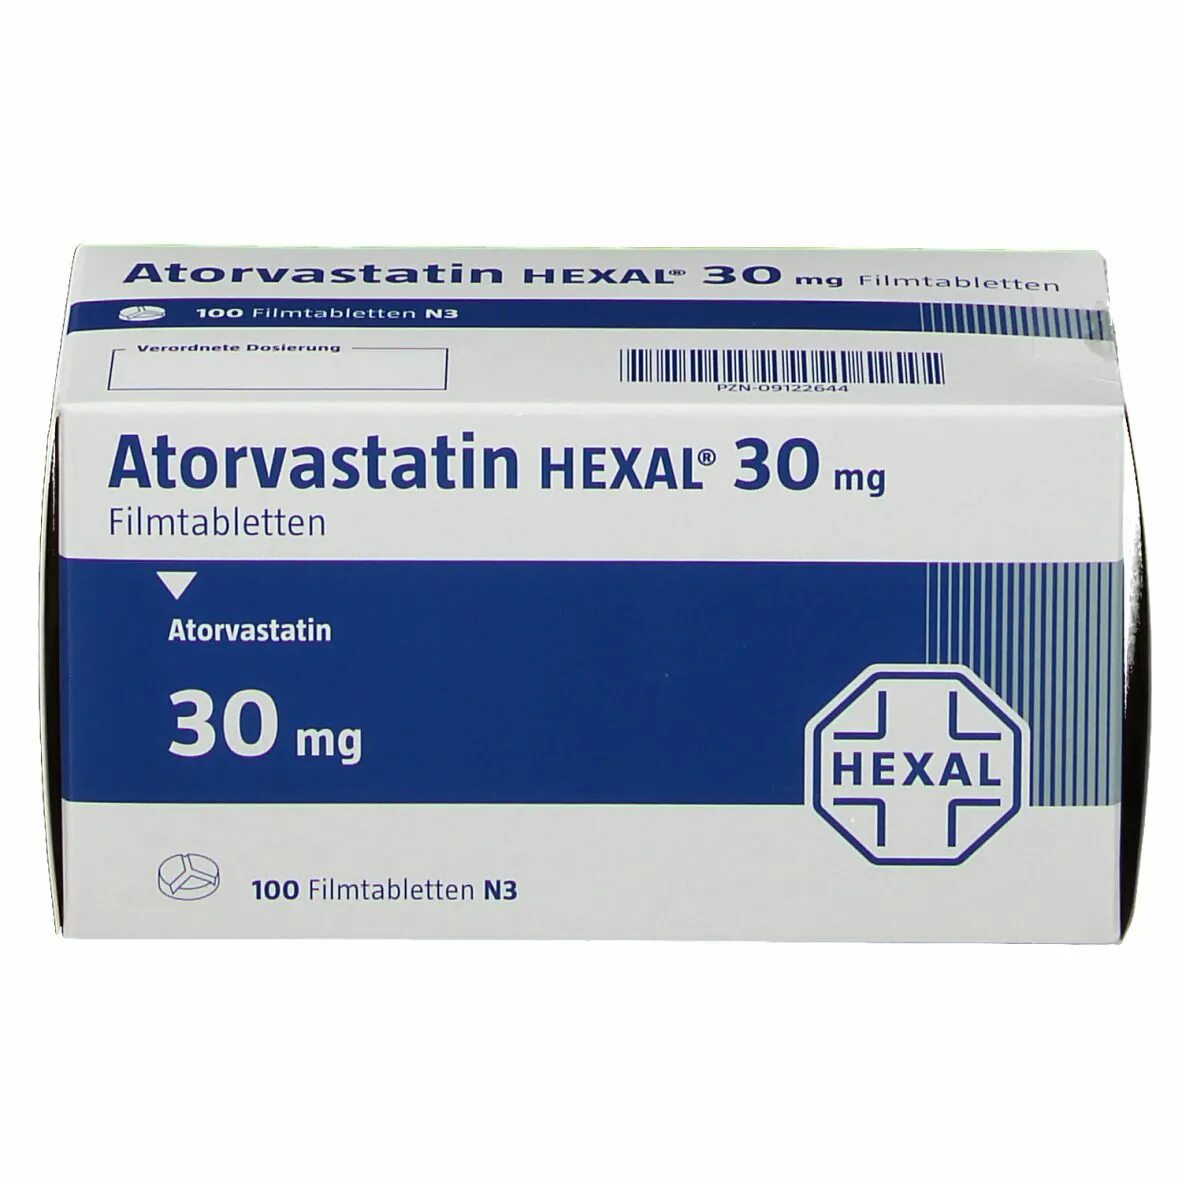 Тамоксифен 20 мг Германия. Тамоксифен Hexal Германия 20мг. Аторвастатин 80 мг,розувастатин 40. Аторвастатин 40 мг.